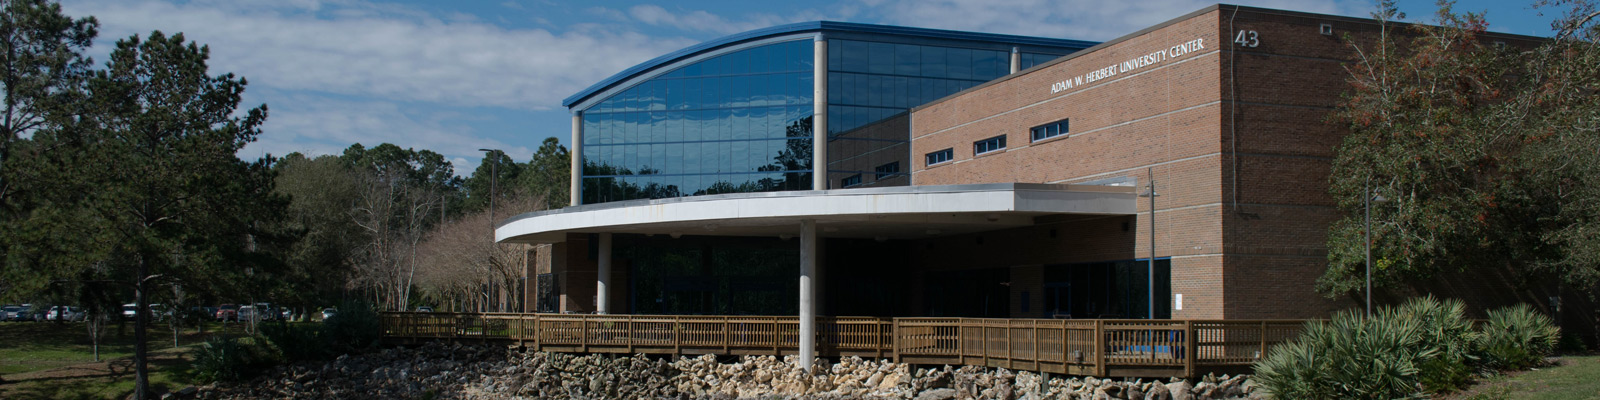 University Center exterior 